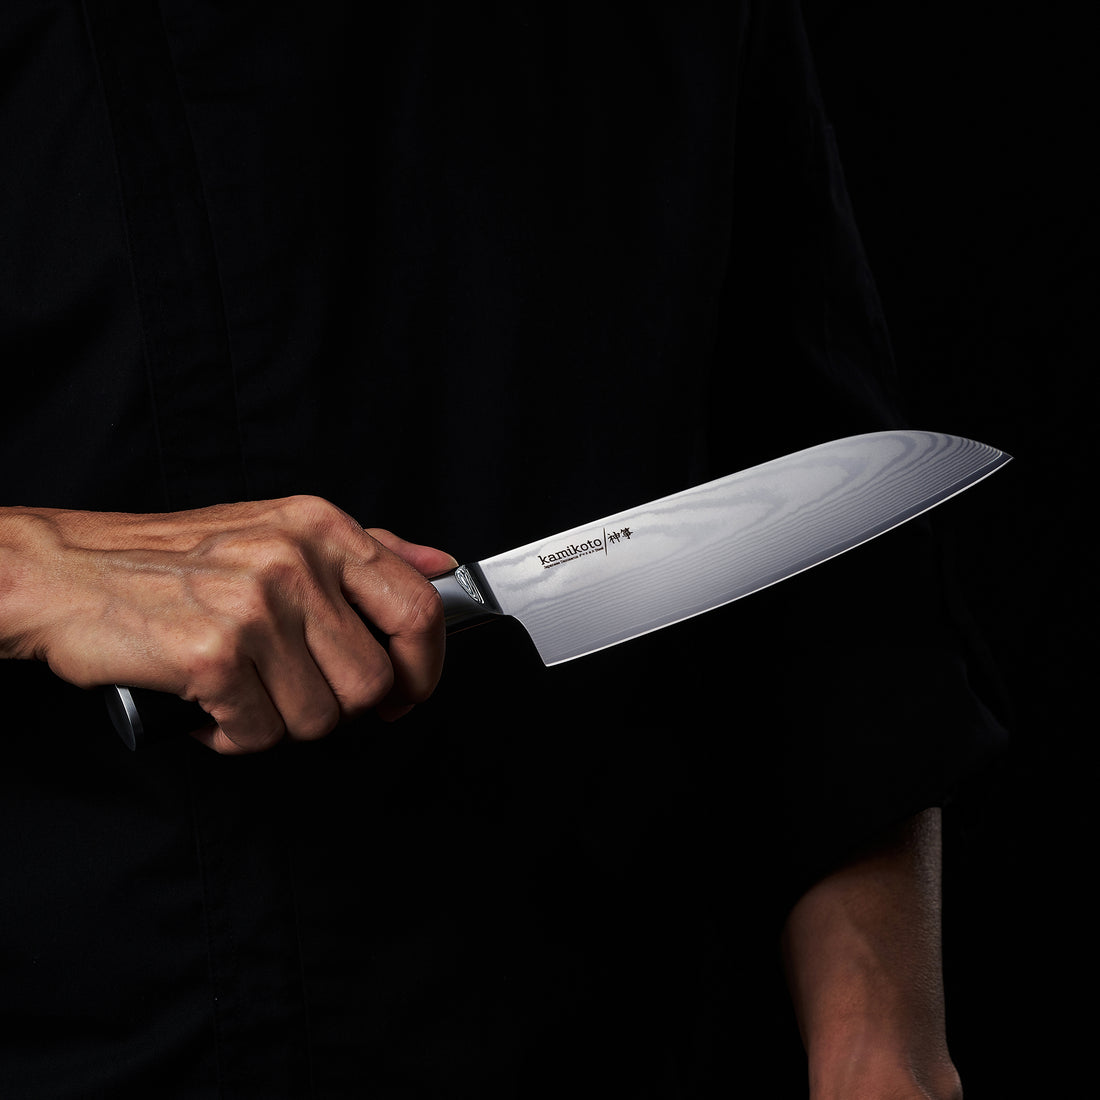 7-inch Damascus Santoku Knife – Kamikoto